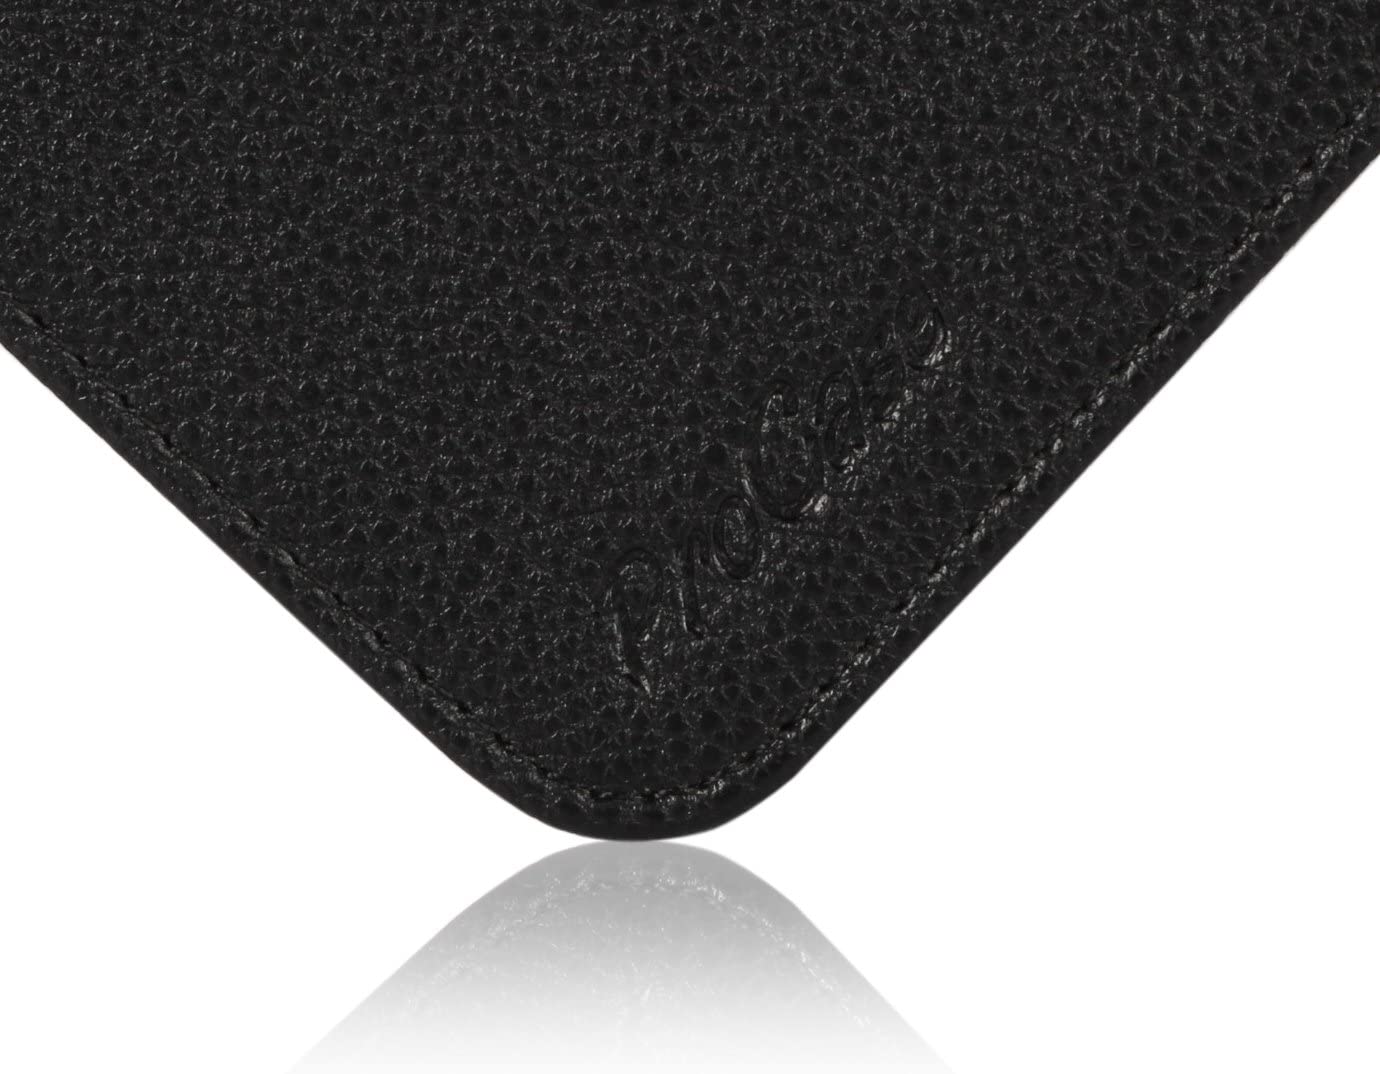 Galaxy Tab 2 10.1 Leather Folio Cover Case | Yapears